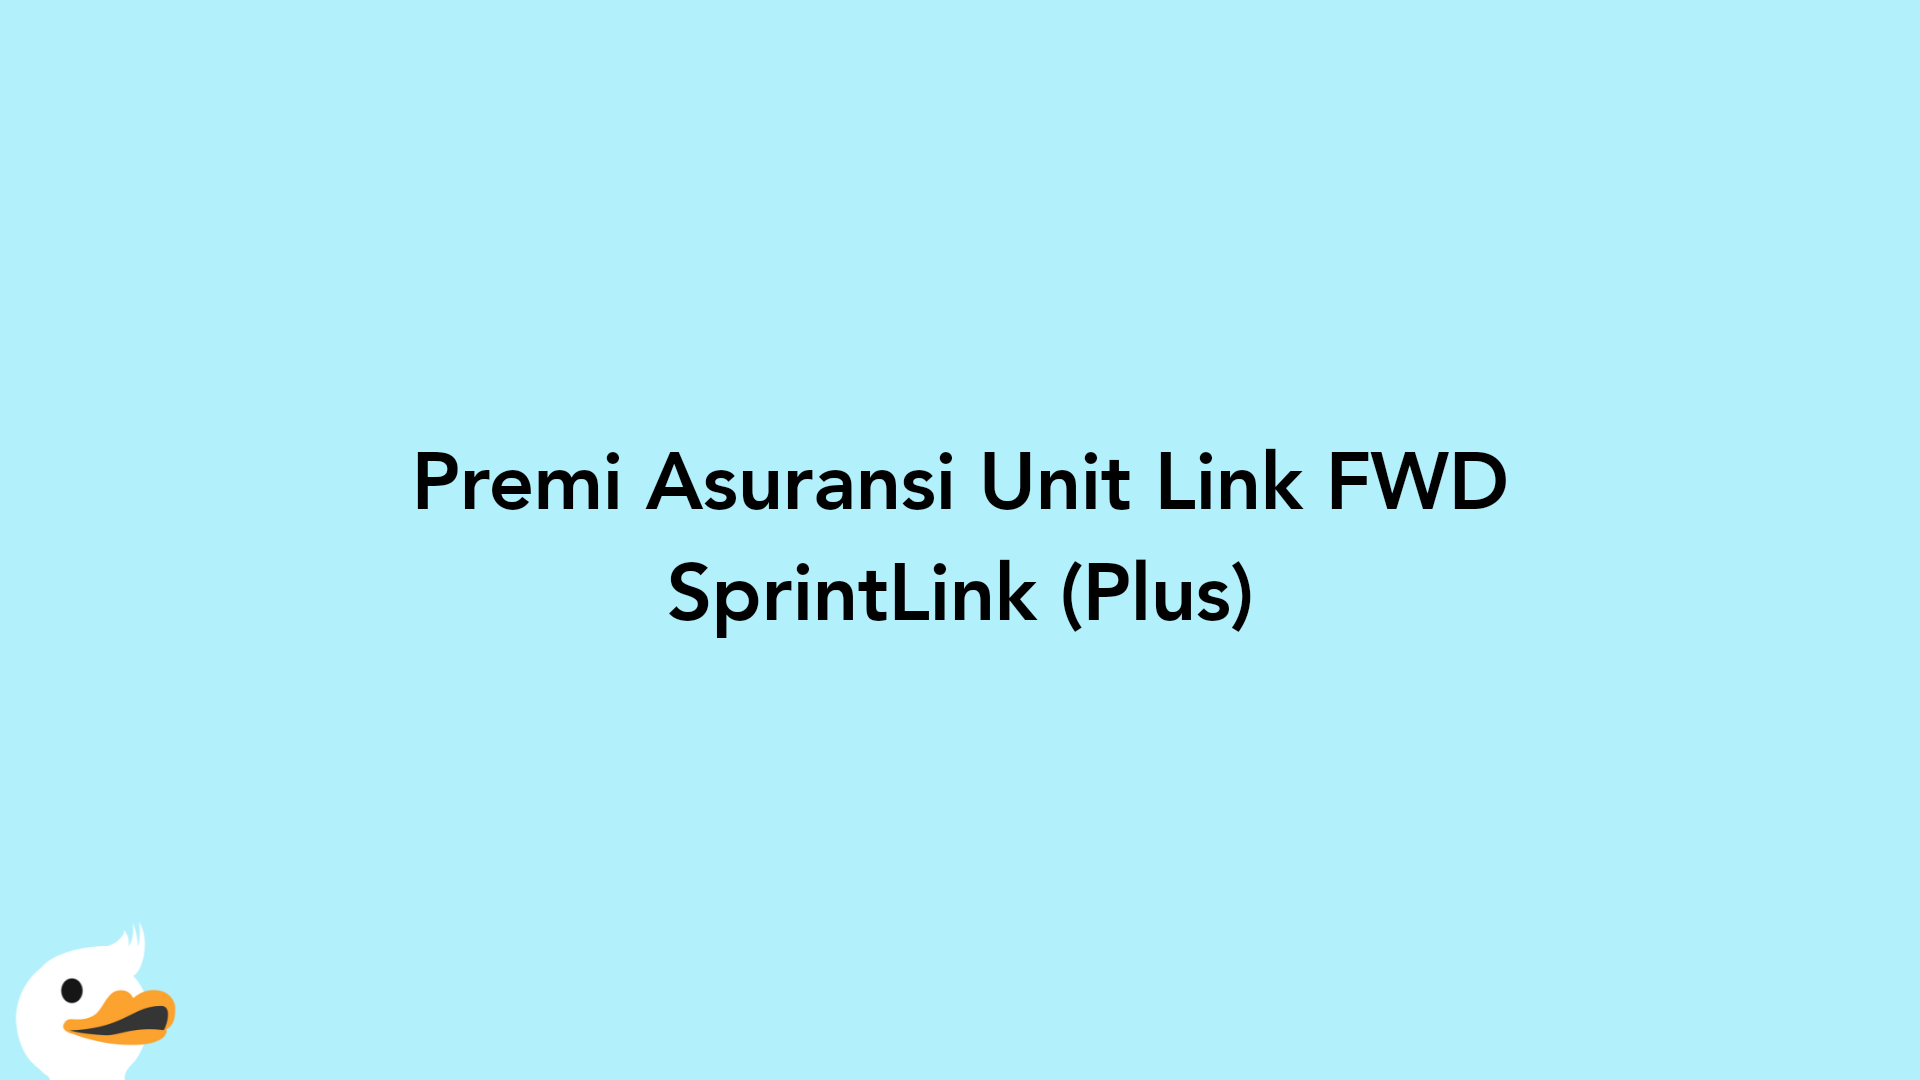 Premi Asuransi Unit Link FWD SprintLink (Plus)